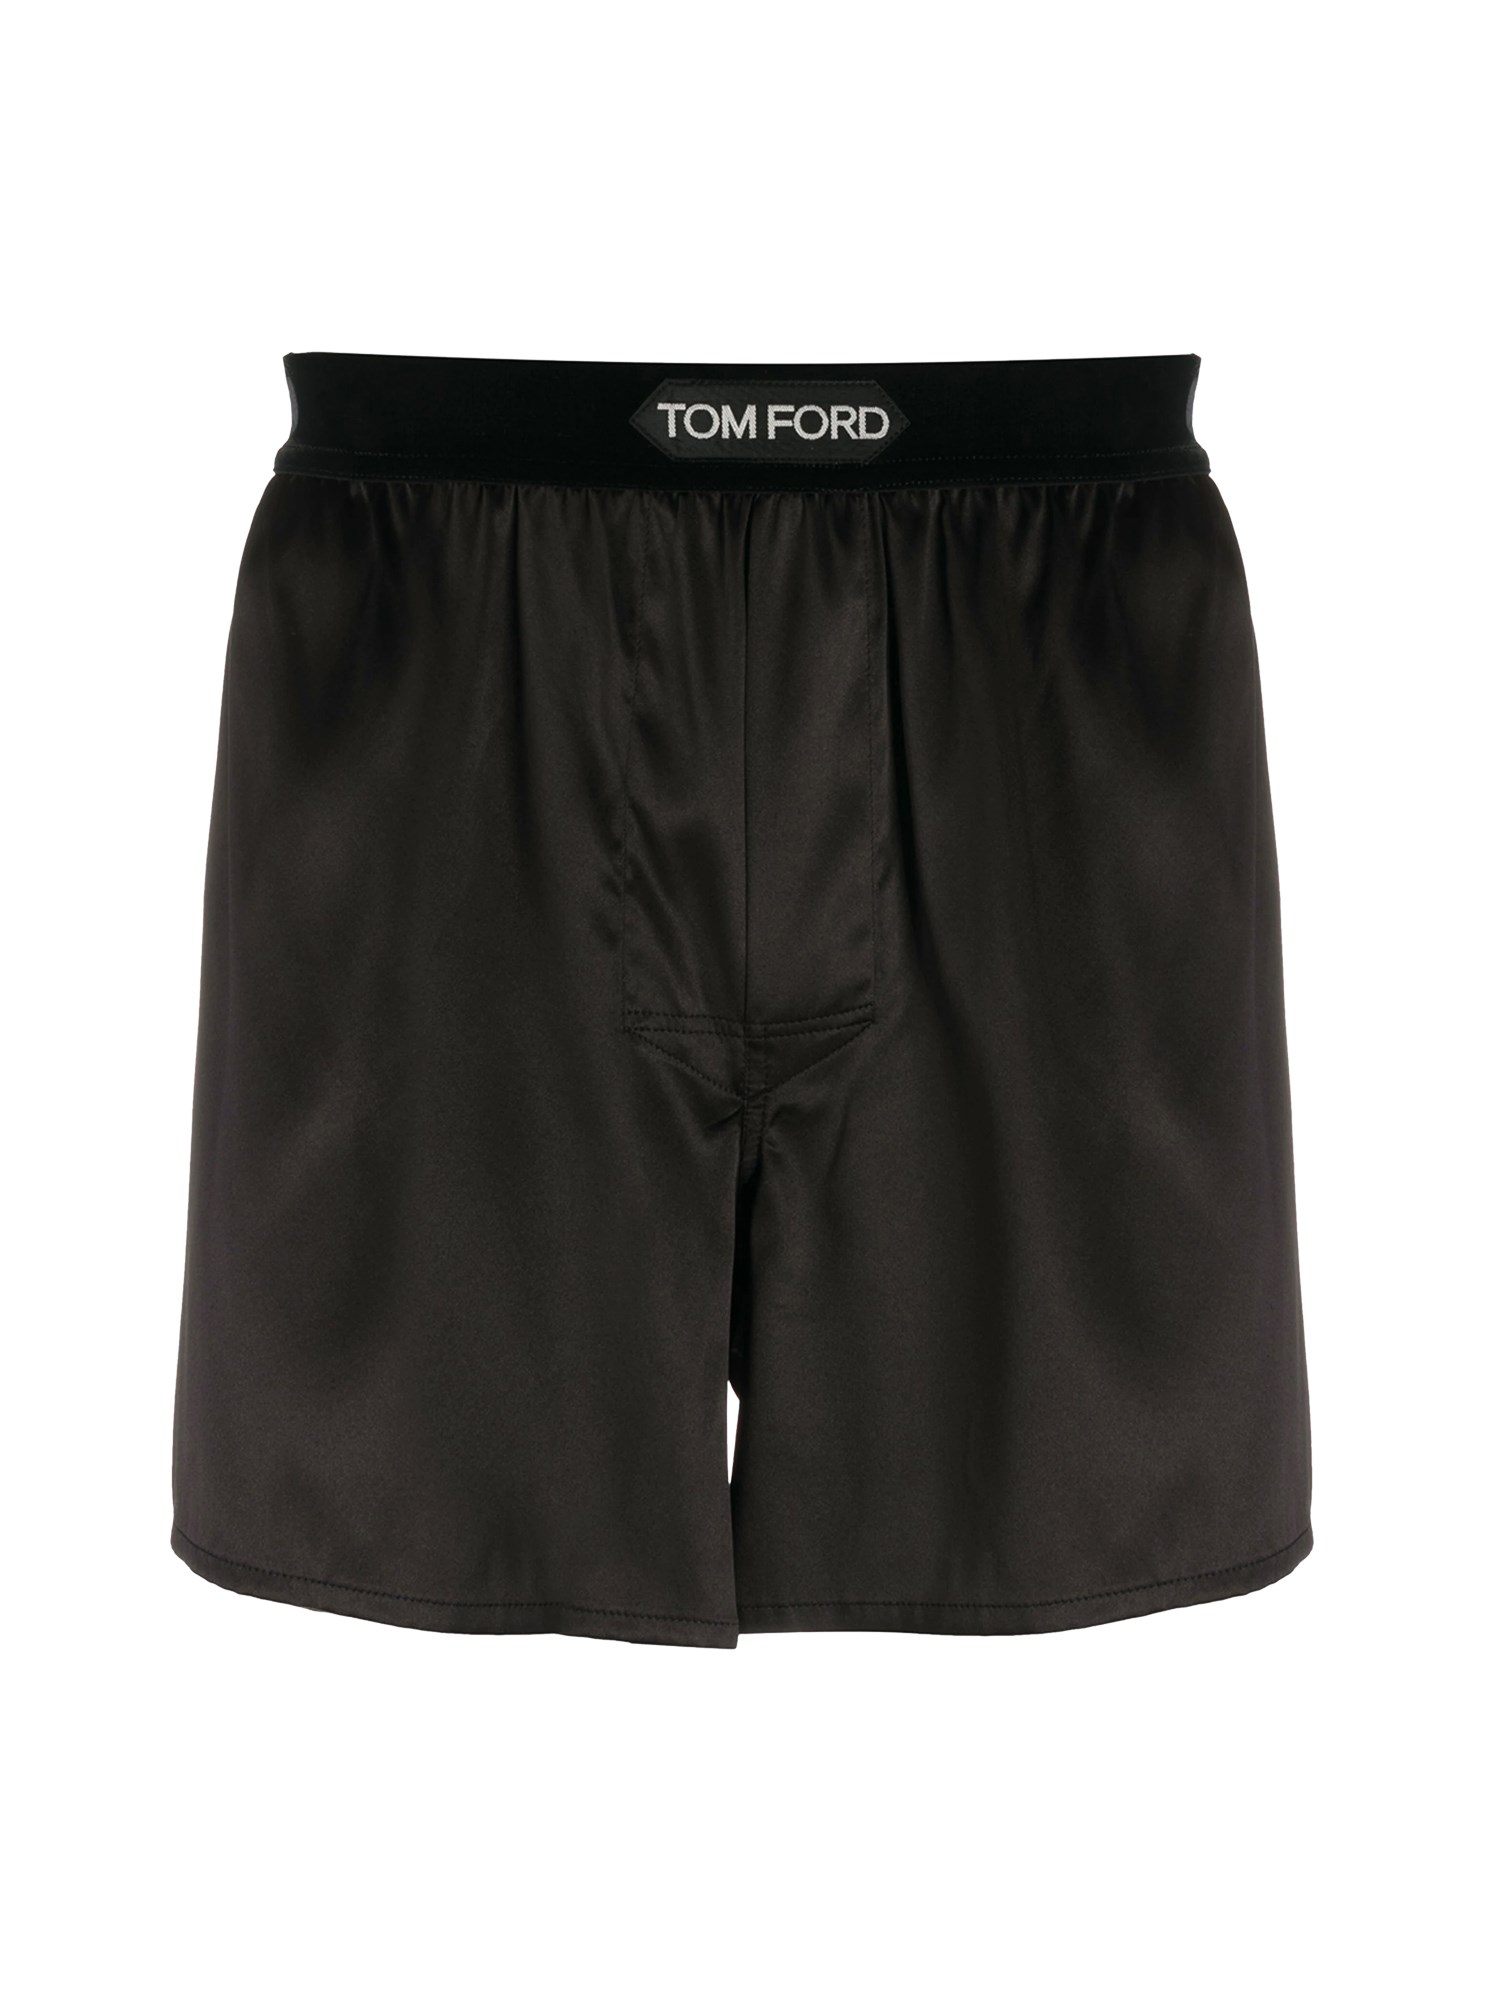 tom ford silk boxer shorts